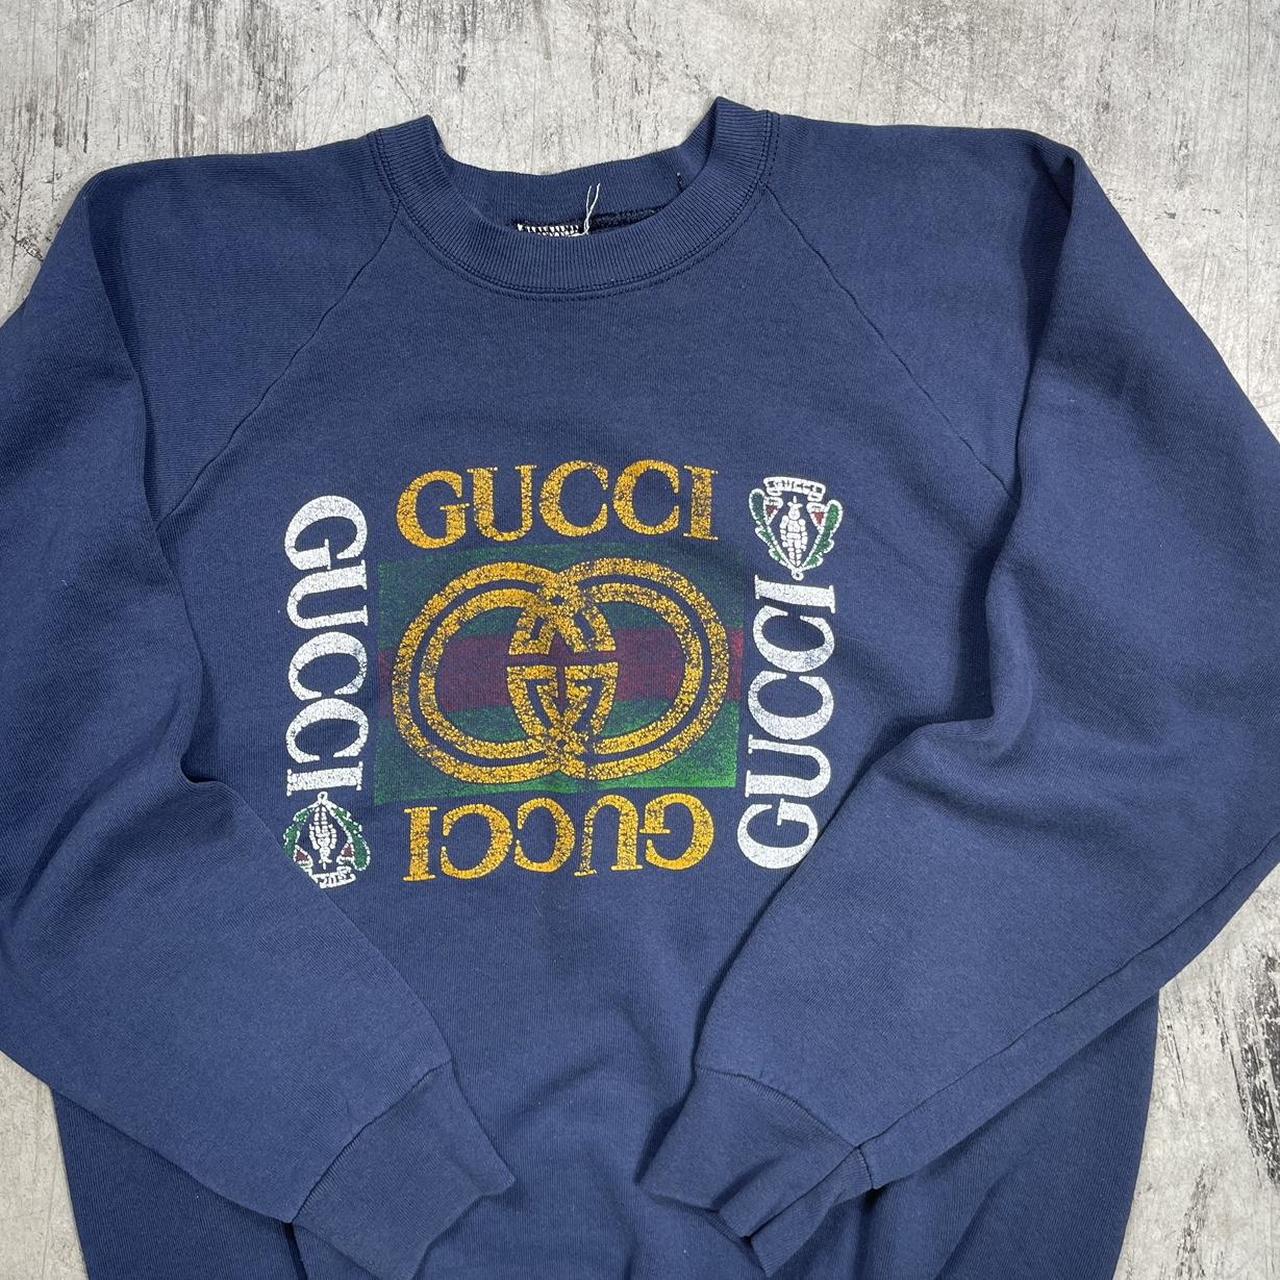 Gucci Men's Navy and Yellow Sweatshirt (2)